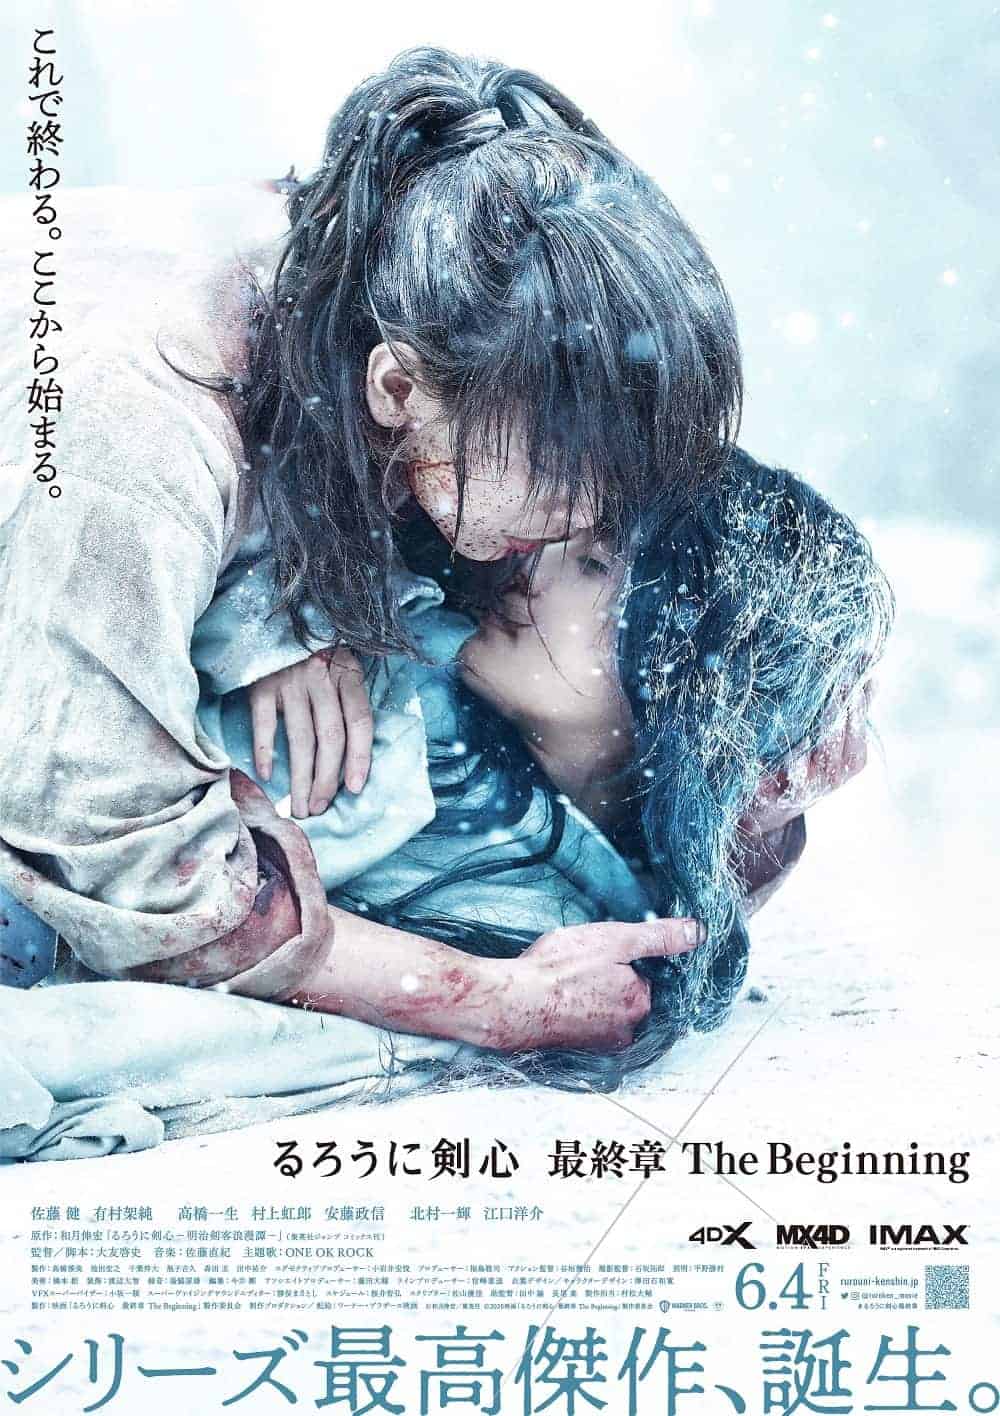 Rurouni Kenshin Final Chapter Part II - The Beginning (2021) 13 Best Action Romance Movies